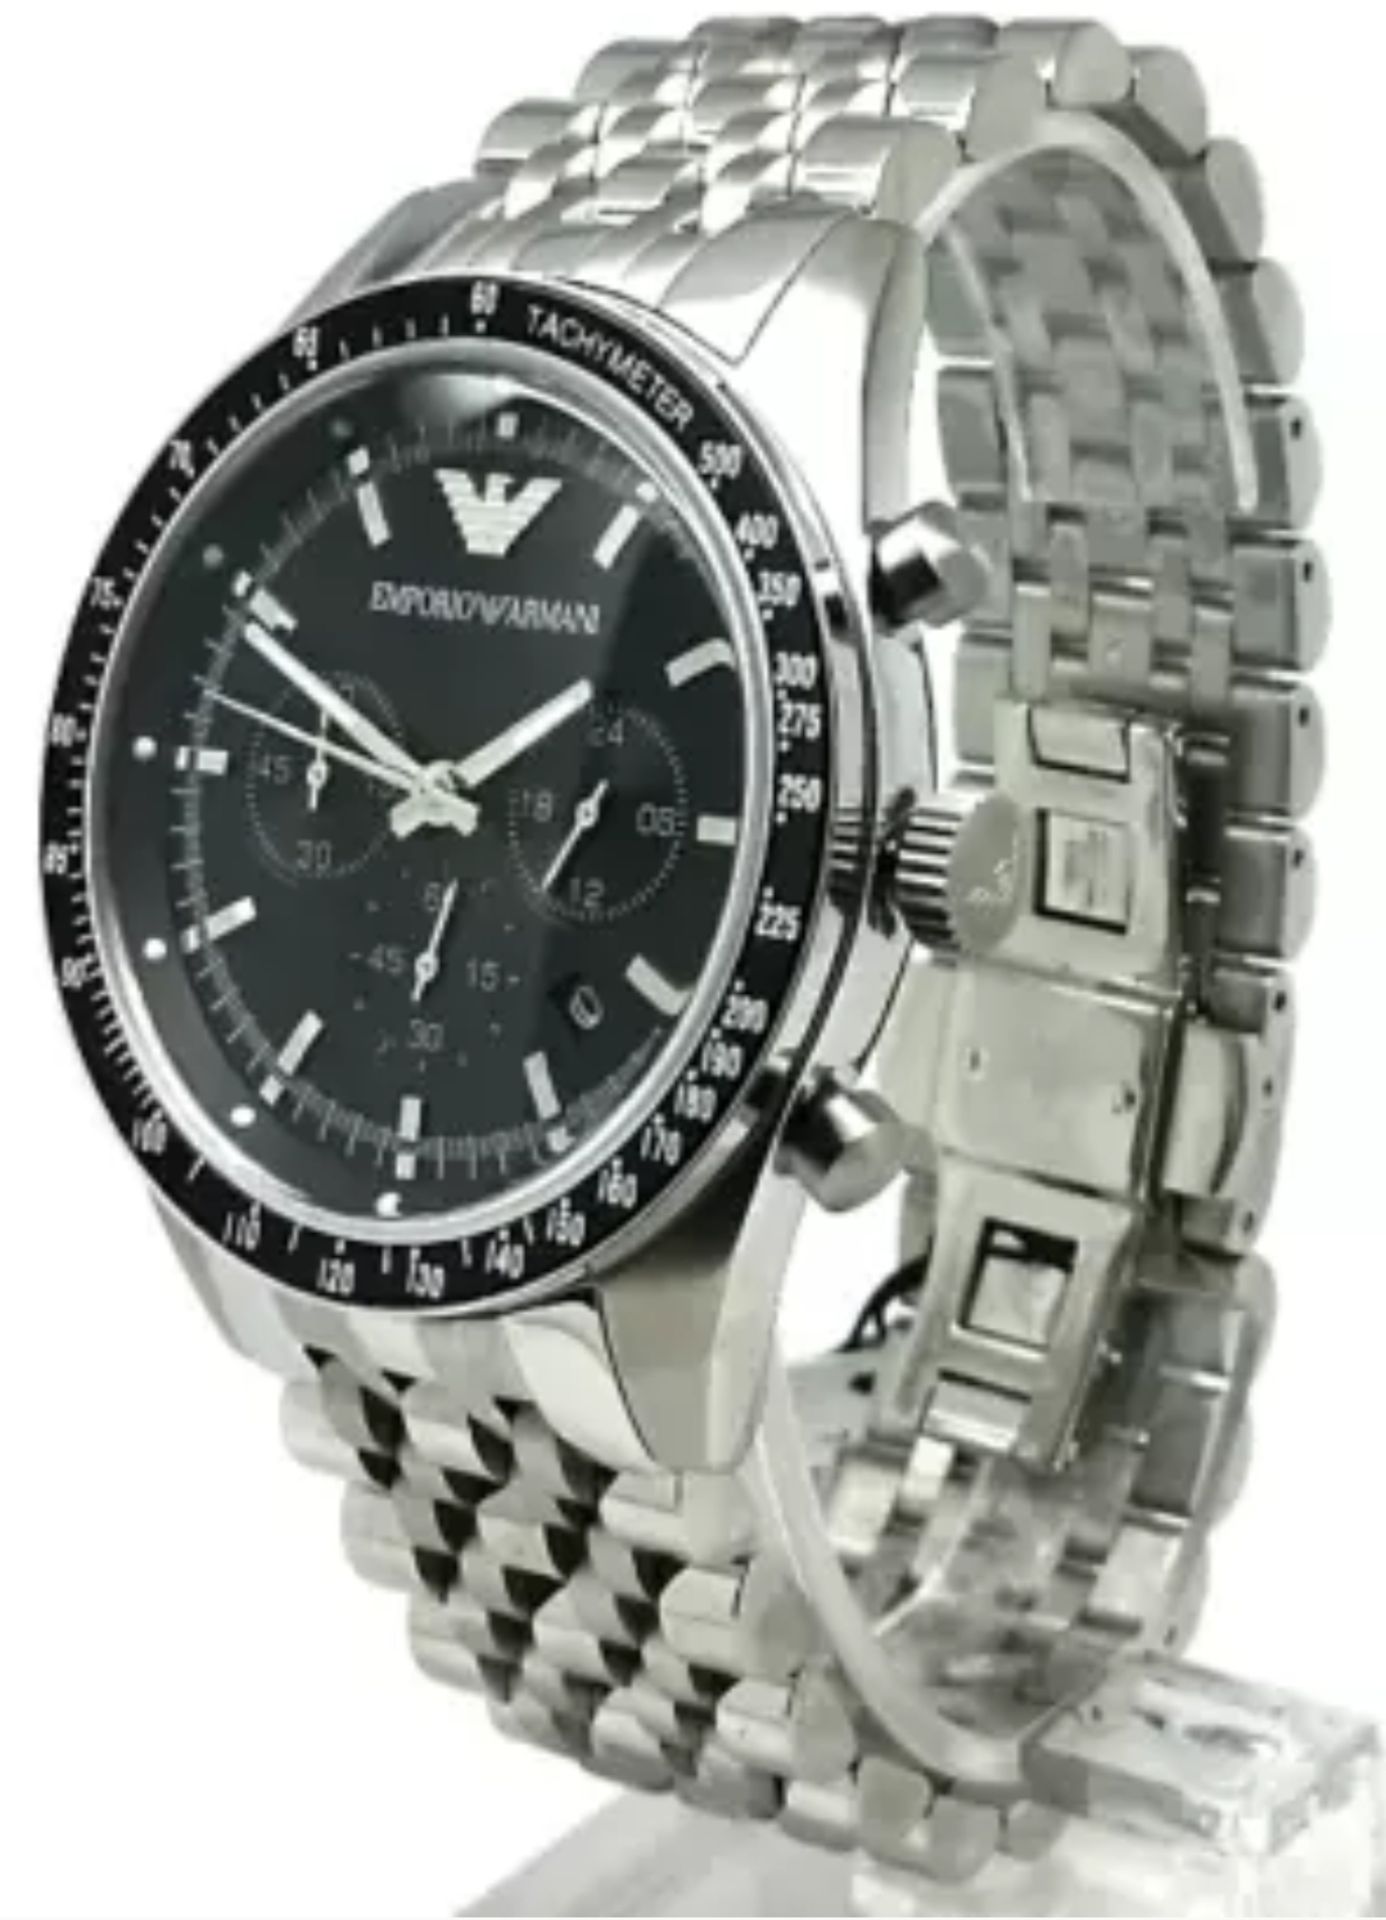 Emporio Armani AR5988 Men's Tazio Black Dial Silver Bracelet Chronograph Watch - Image 2 of 10